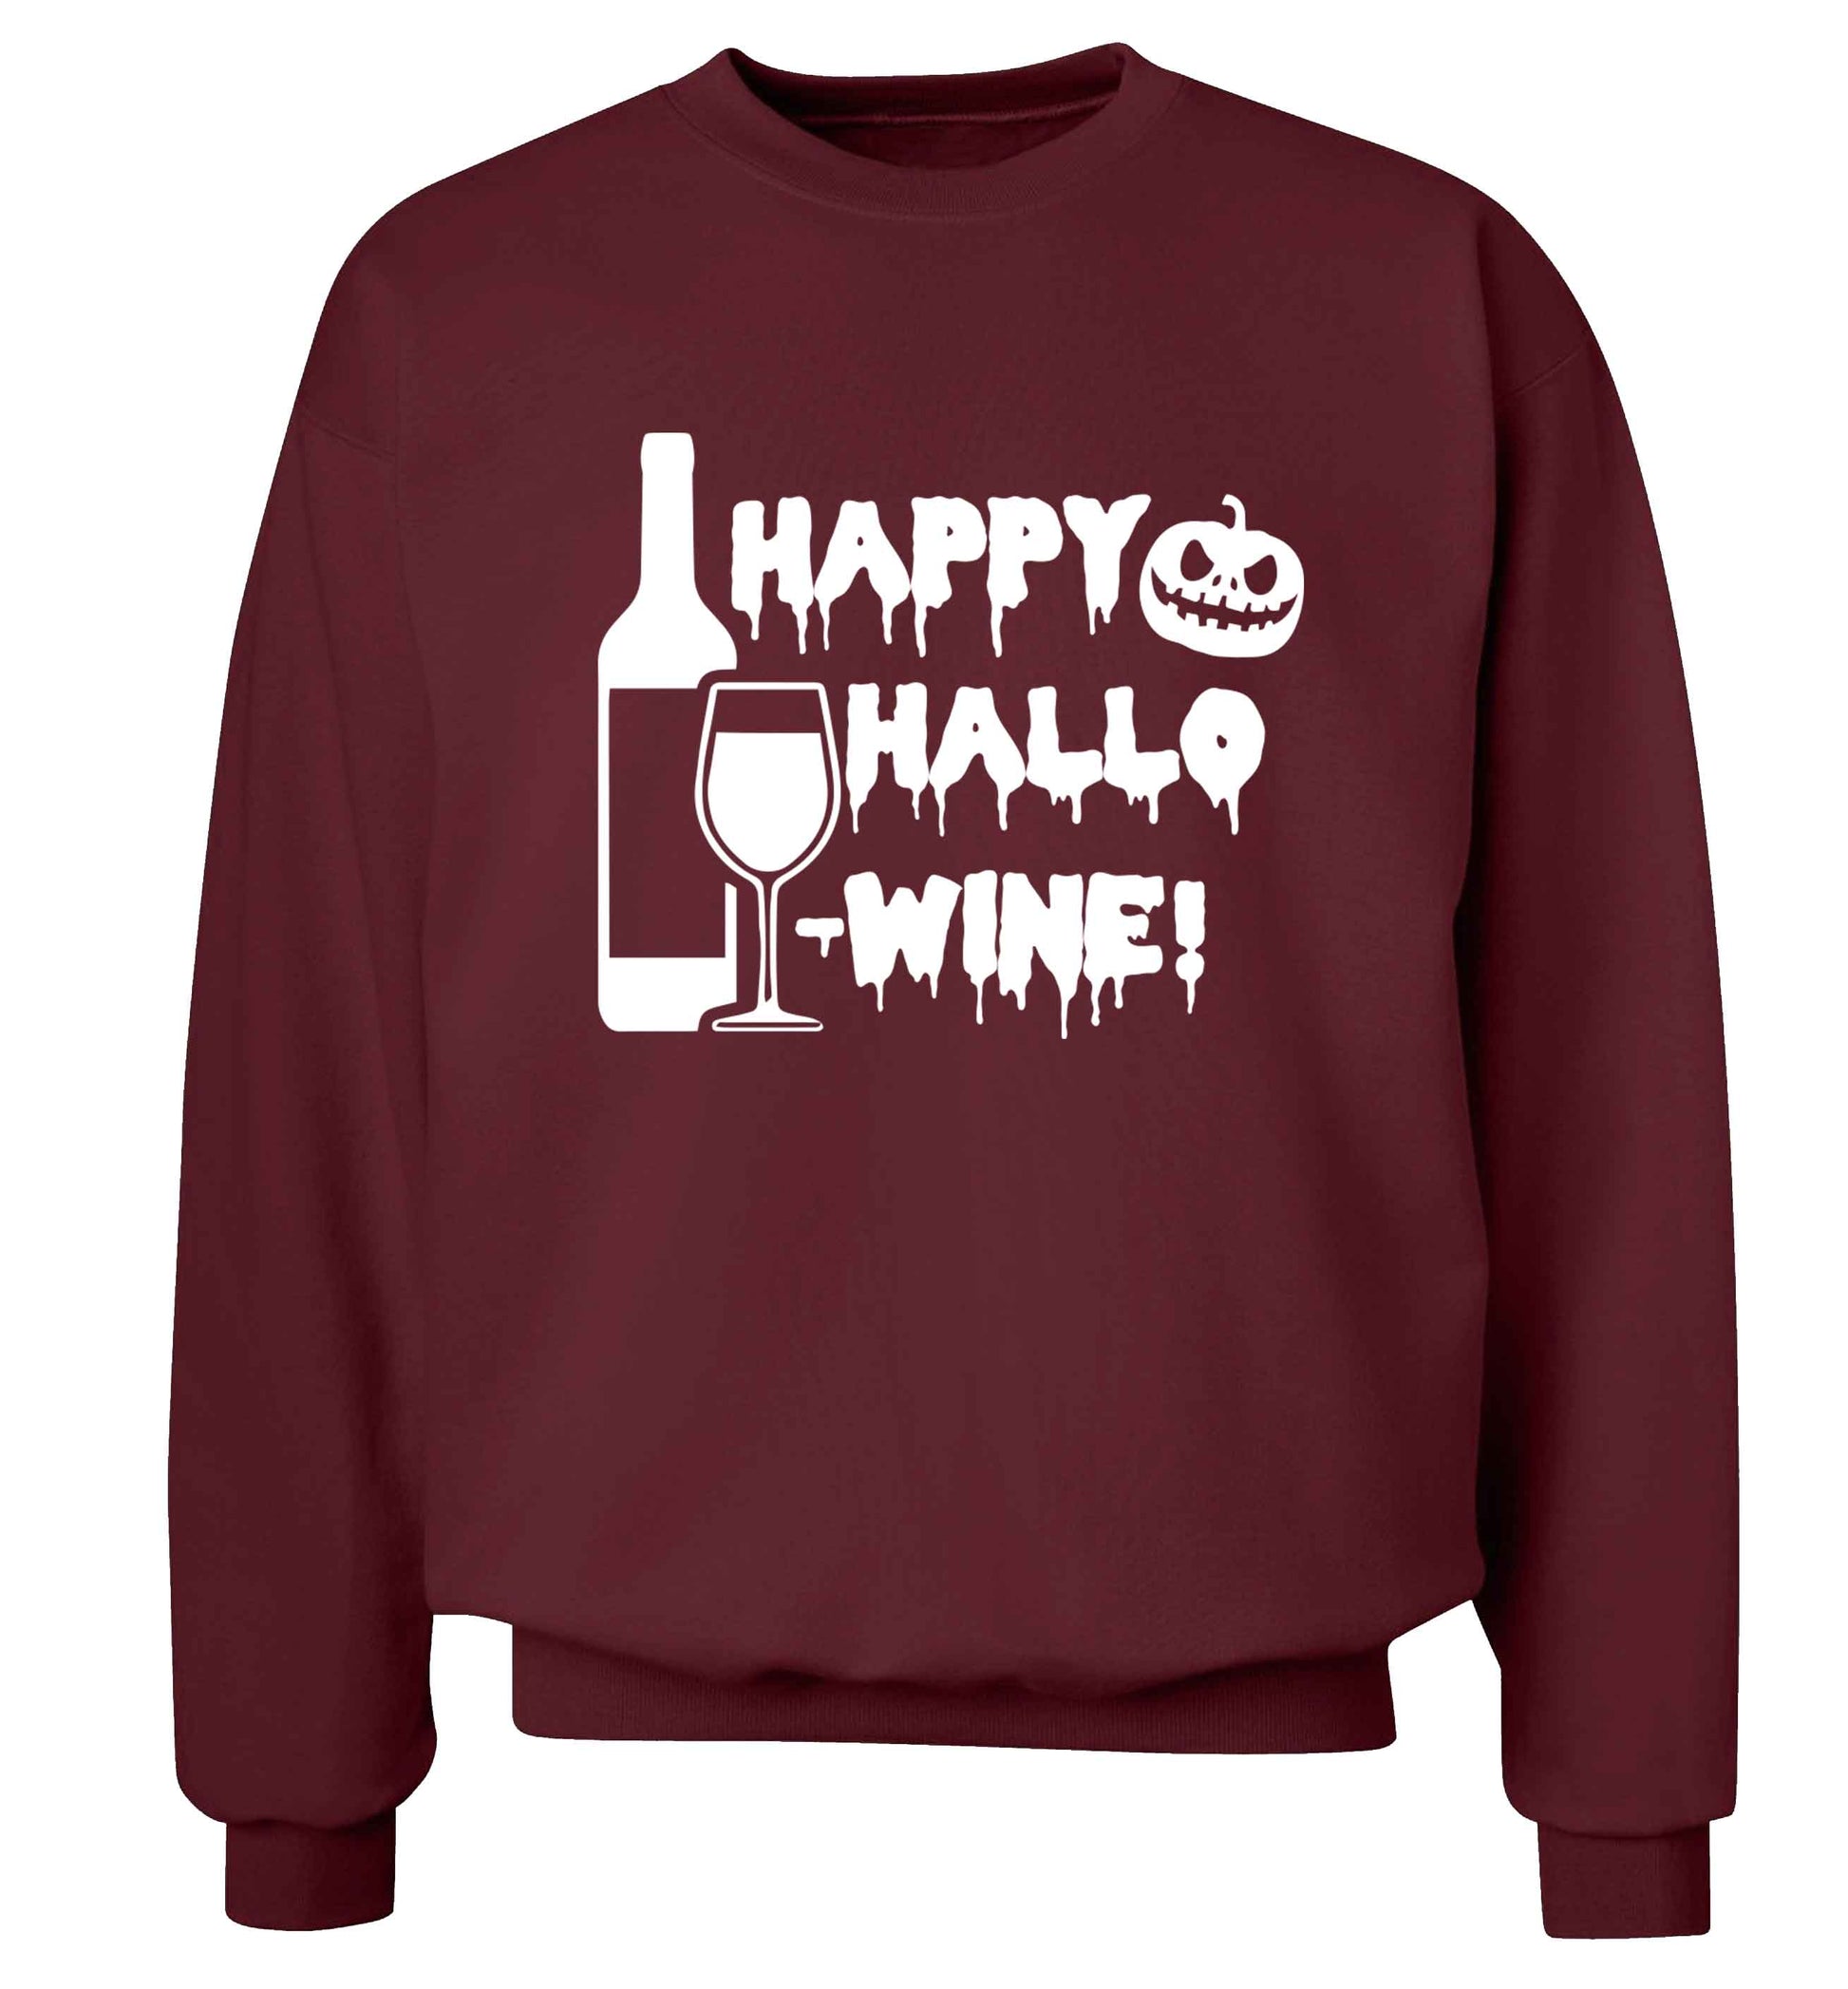 Happy hallow-wine Adult's unisex maroon Sweater 2XL